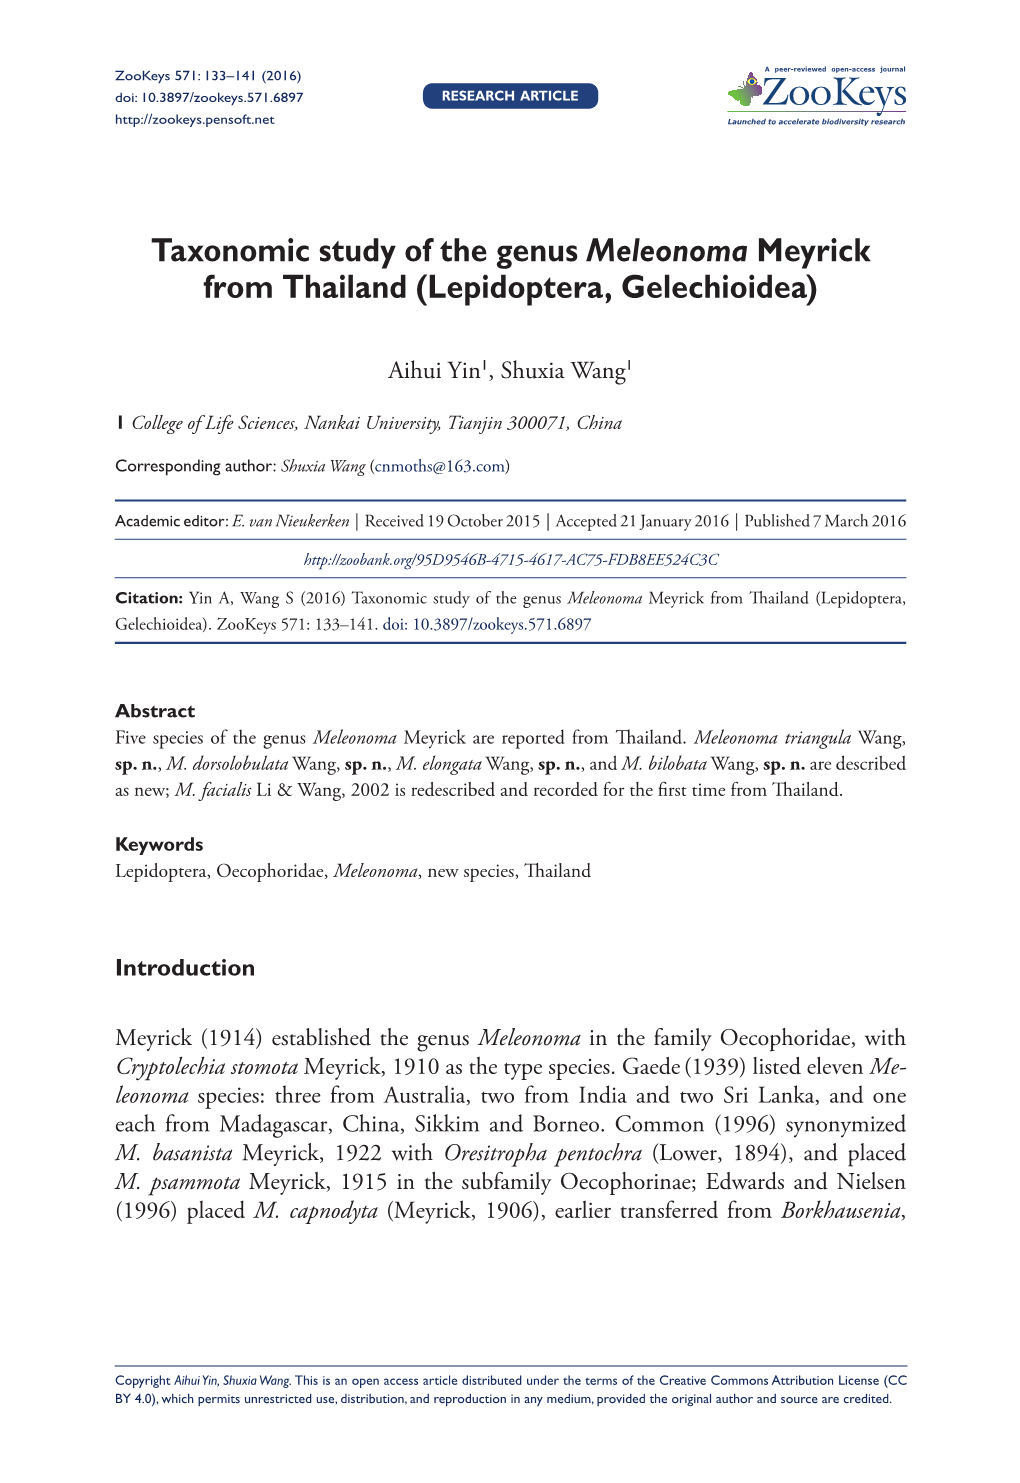 ﻿Taxonomic Study of the Genus Meleonoma Meyrick from Thailand